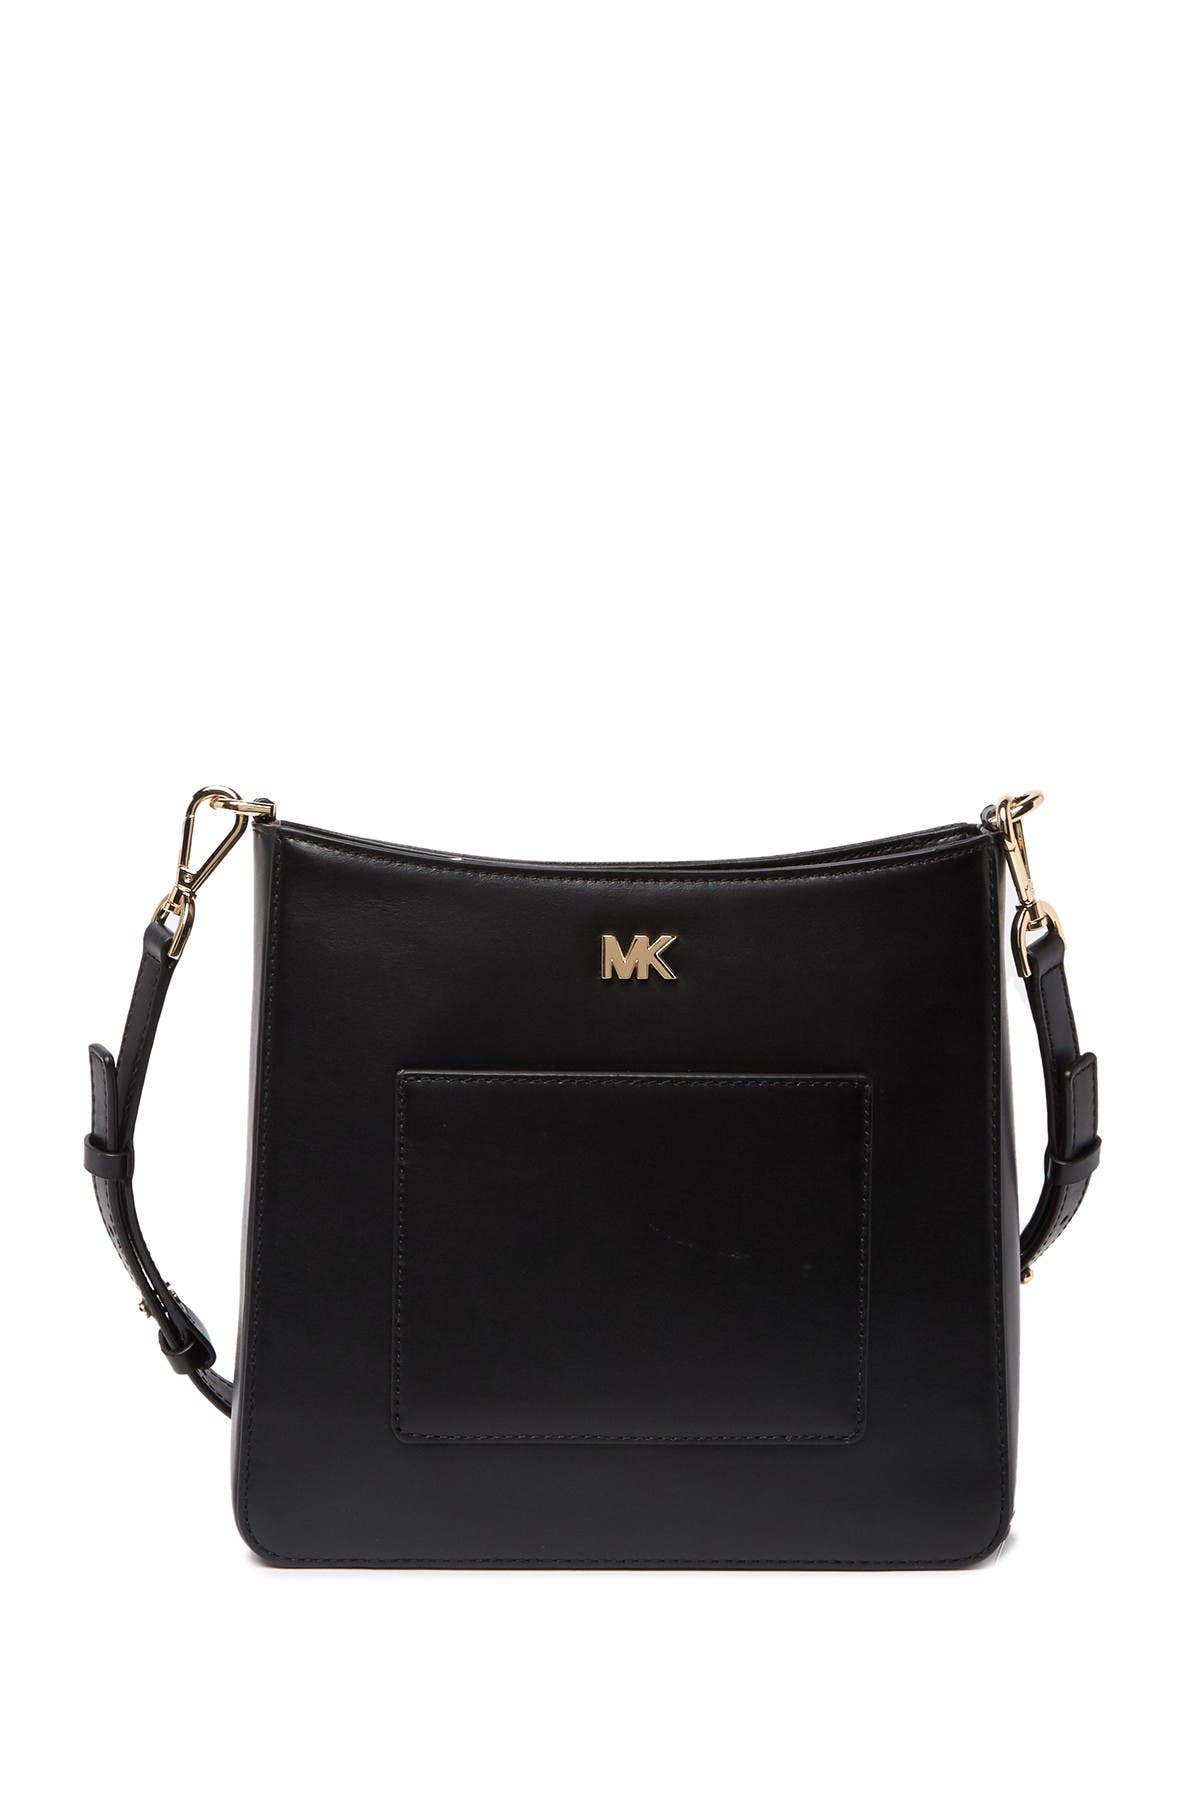 mk black crossbody bag